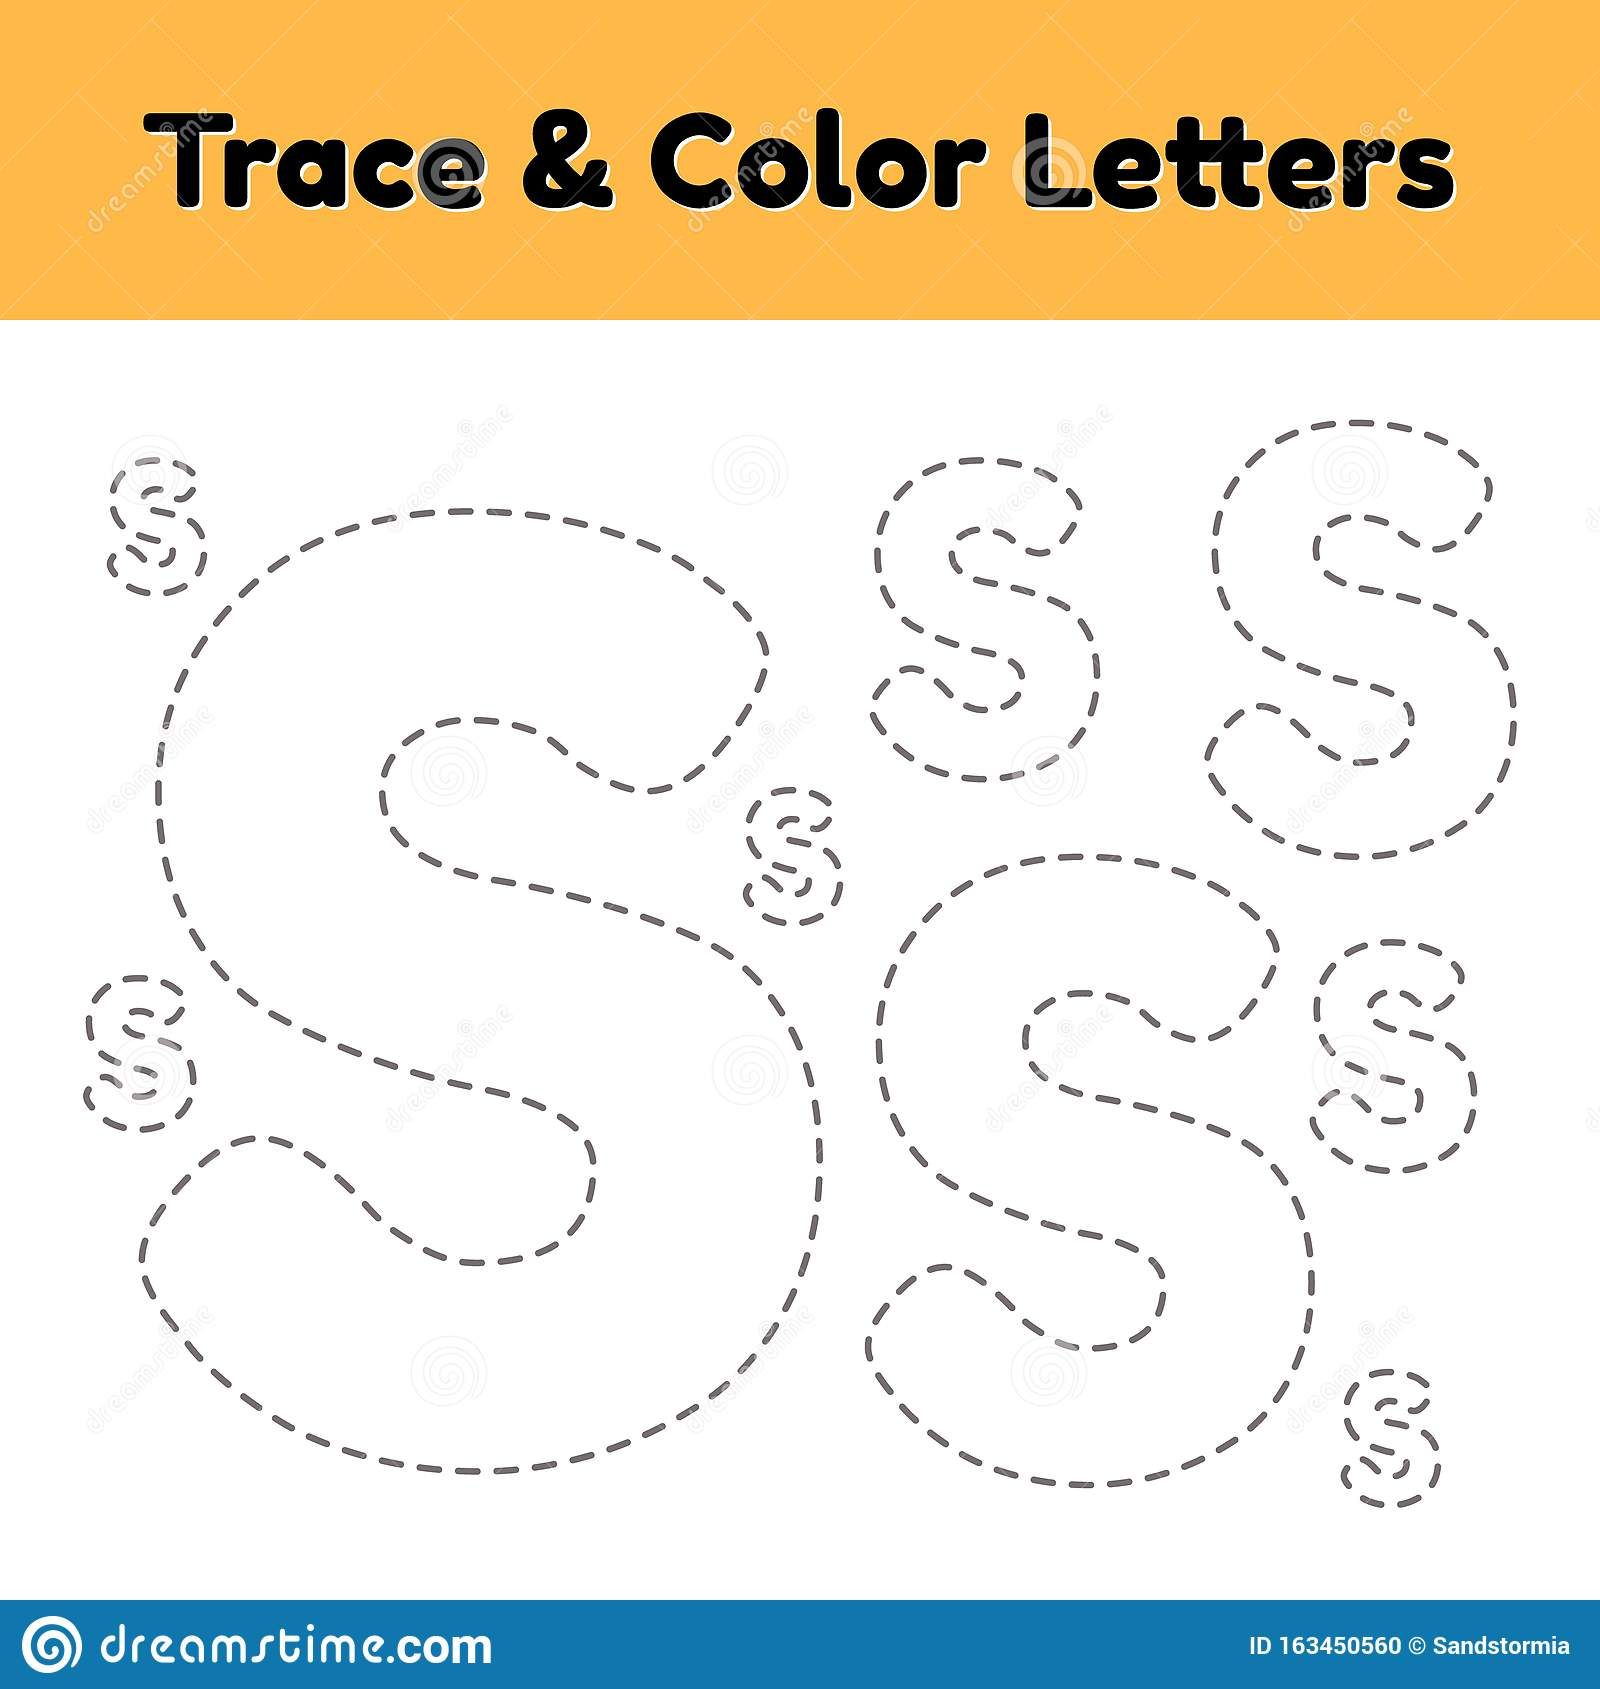 Trace Line Letter For Kindergarten And Preshool Kids. Write